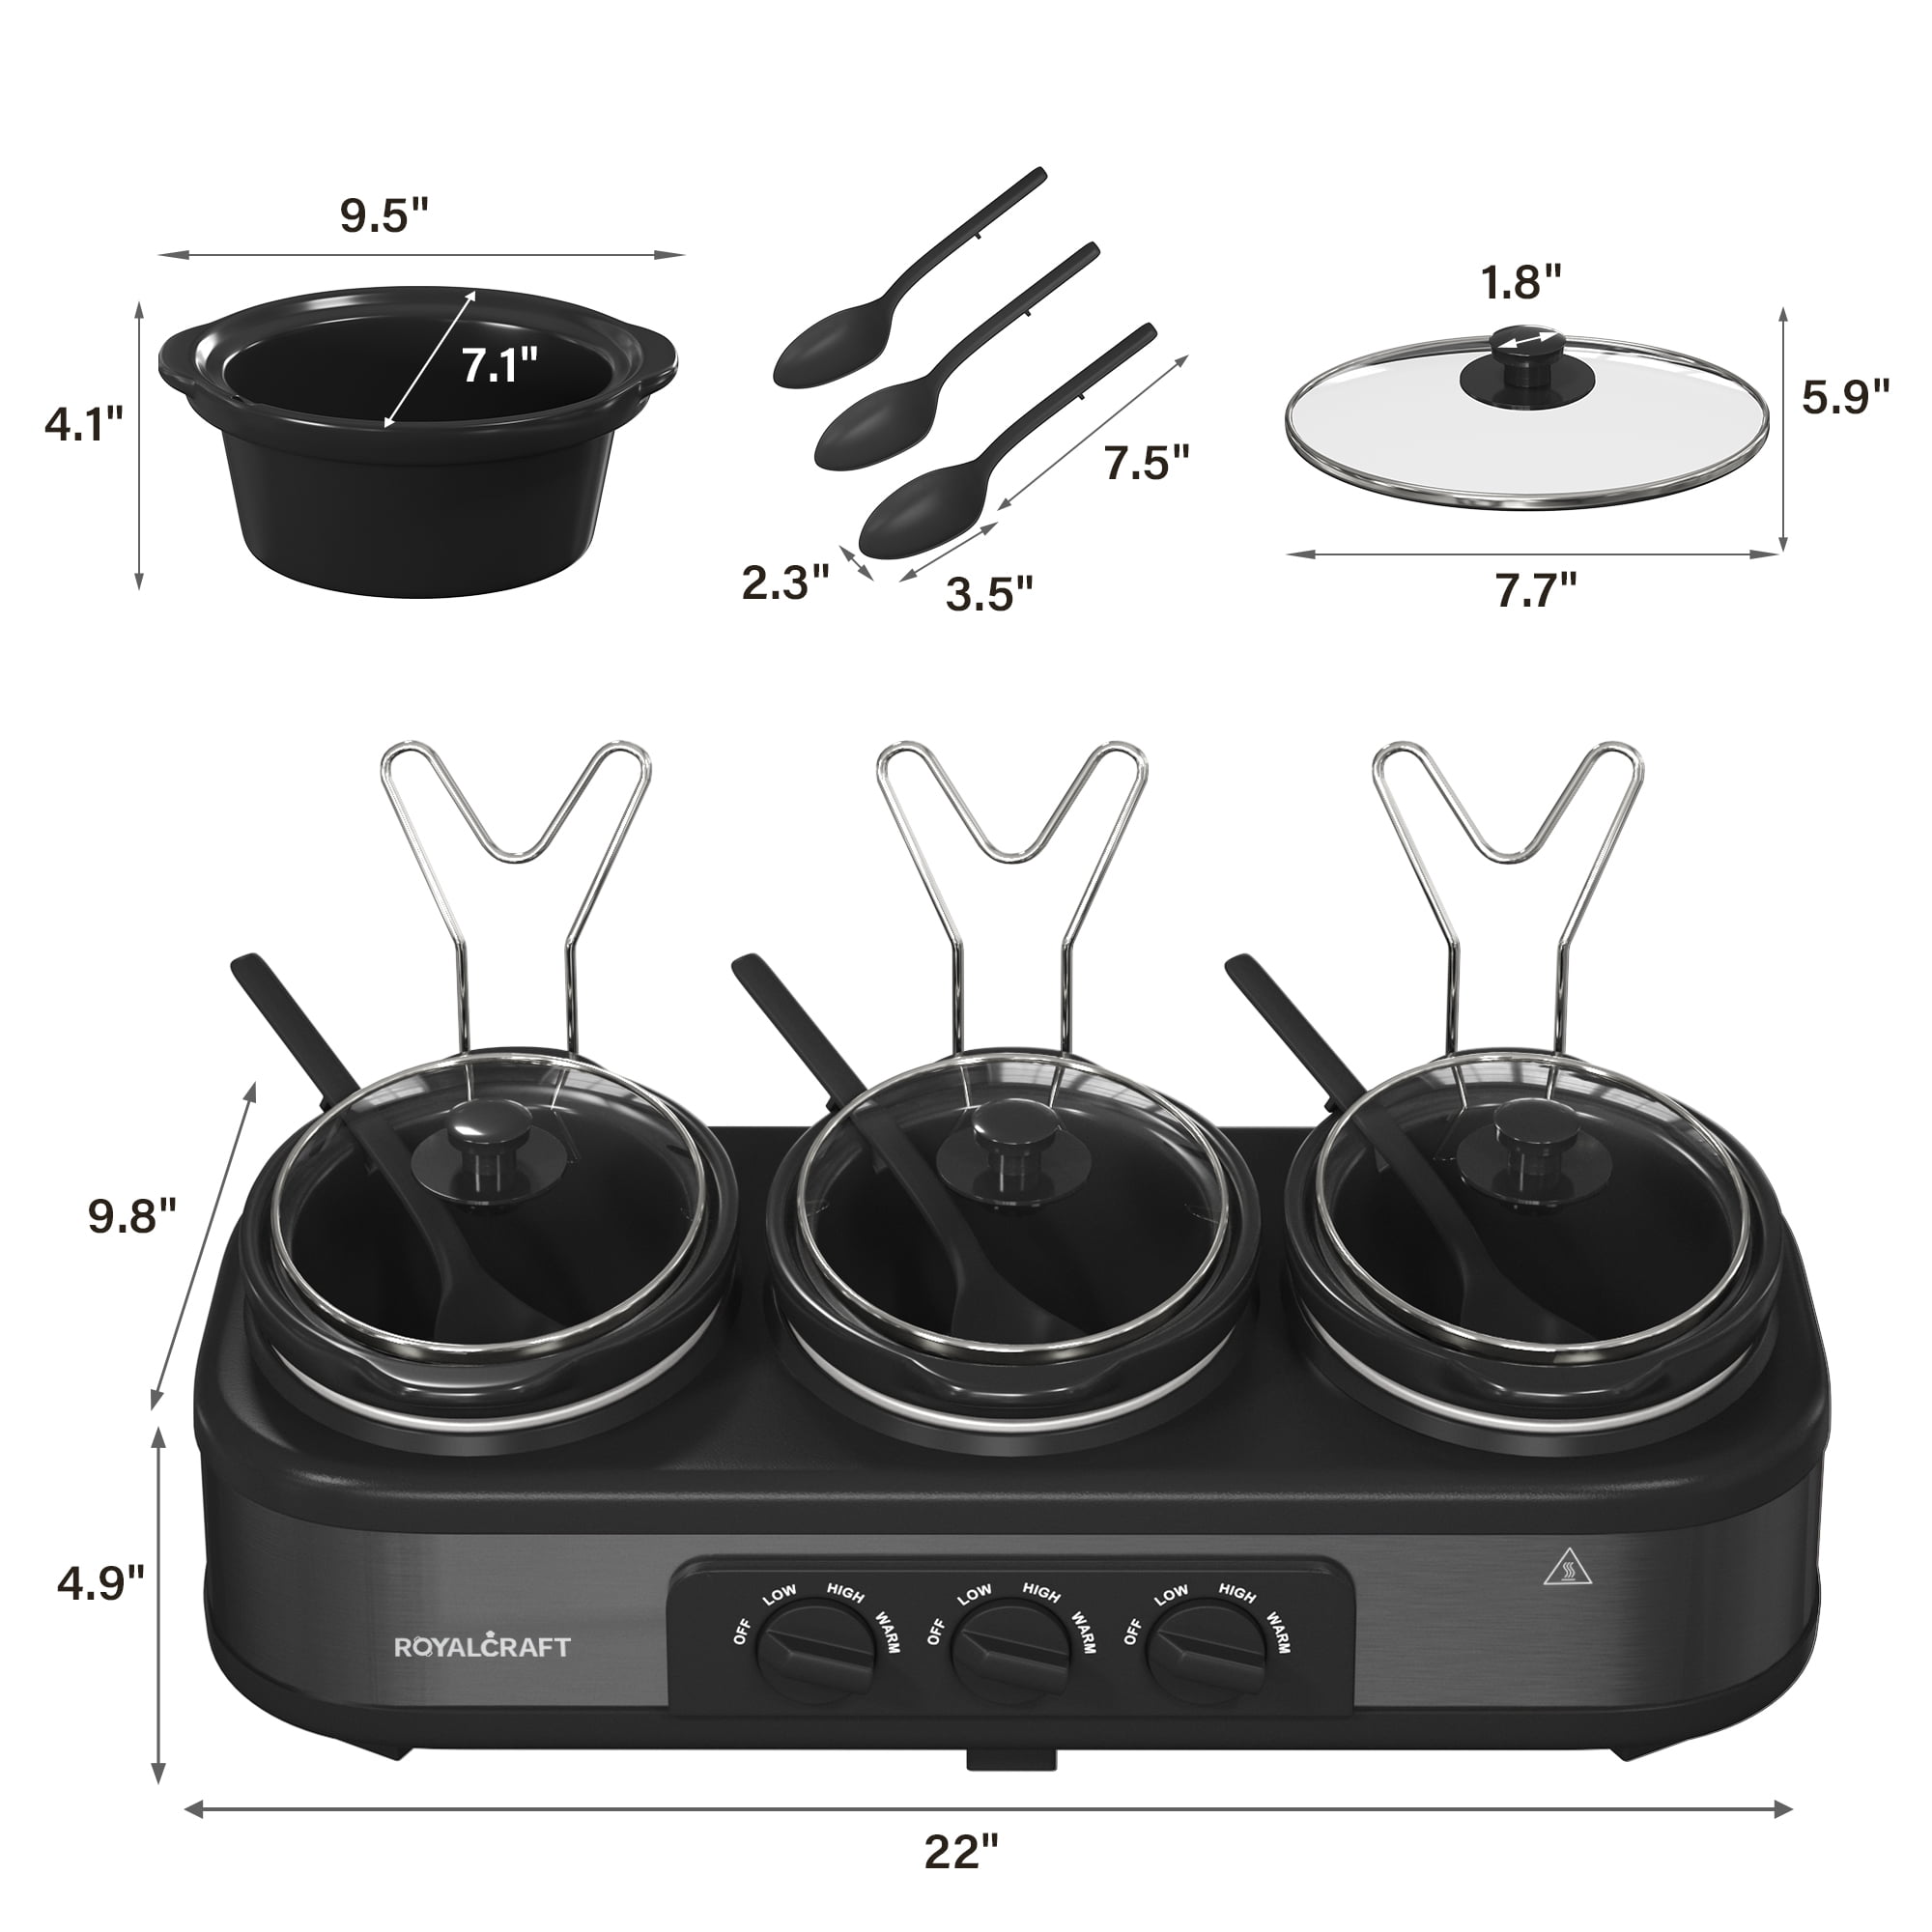 Sunvivi Small Double Slow Cooker, 2 Pot 1.25 Quart Oval Crock Food Warmer Buffet Server, Stainless Steel, Size: 2 x 1.25 qt, Black